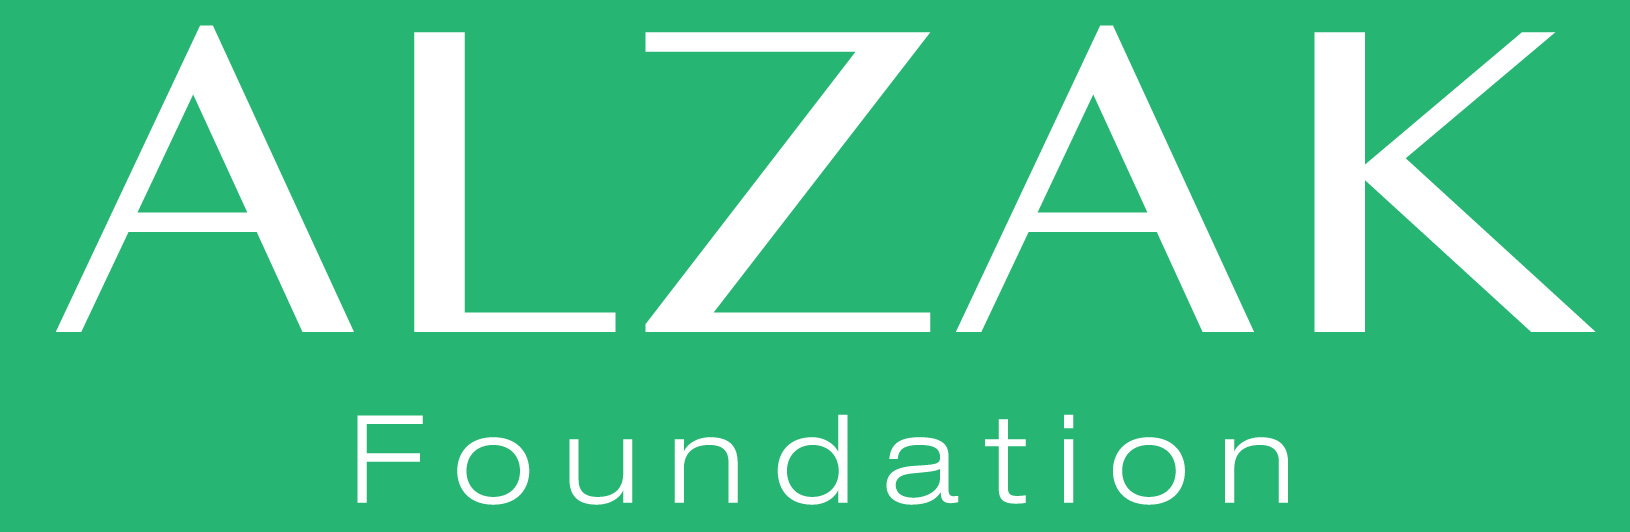 Donate to ALZAK Foundation